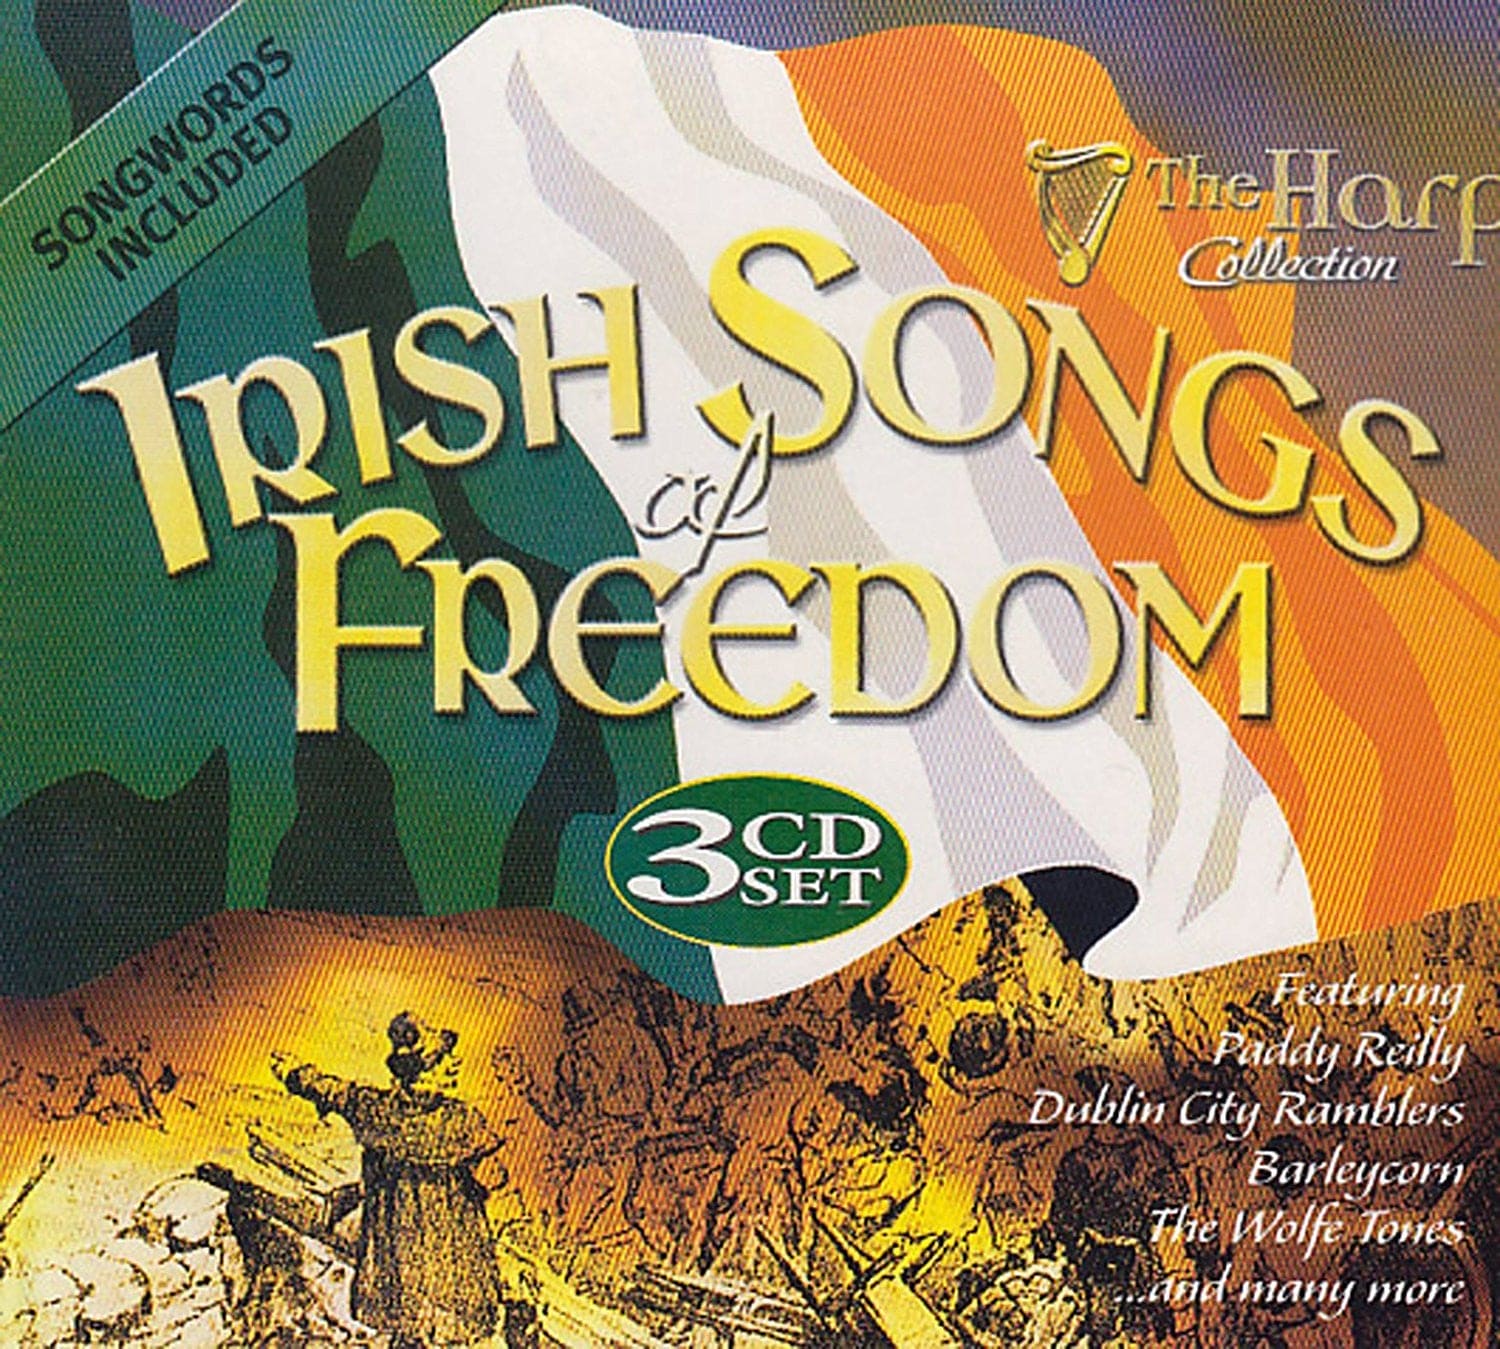 Irish Songs of Freedom (3CD Set) - Various